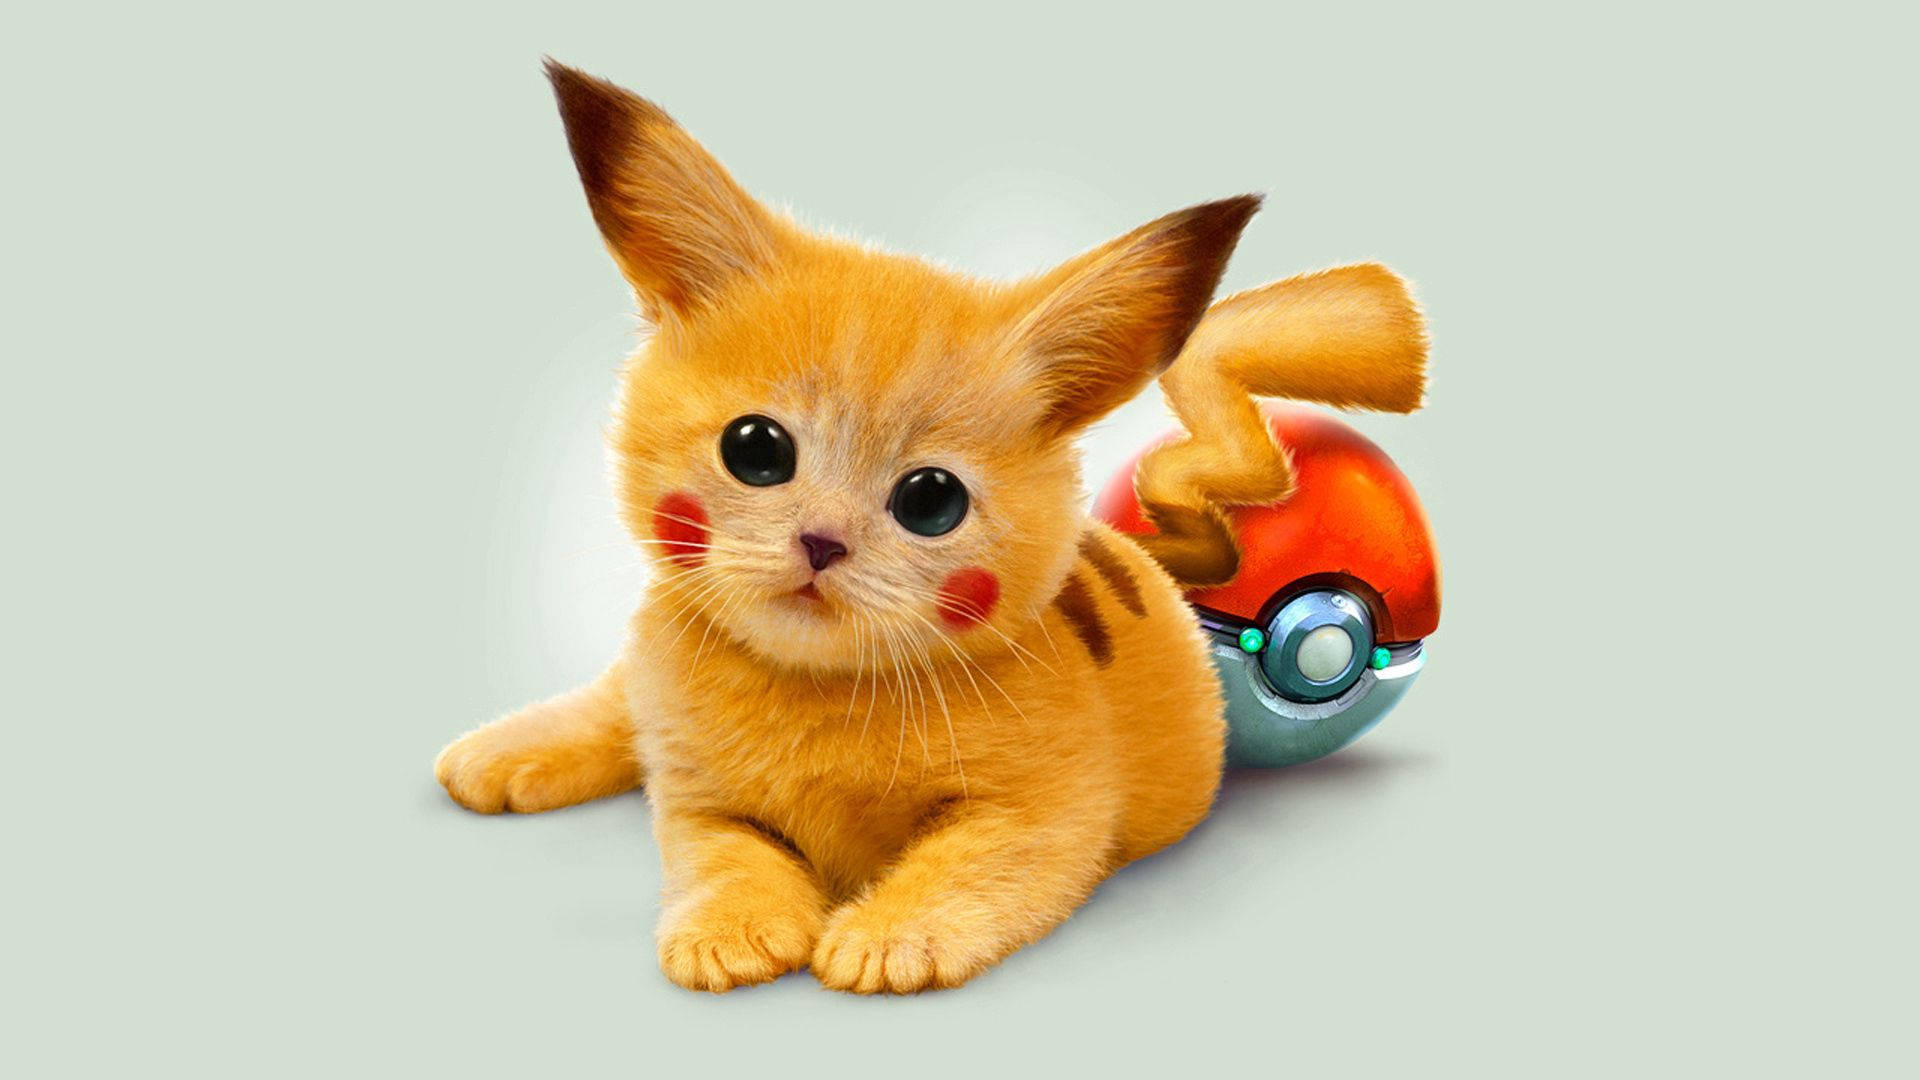 Cute And Cuddly Pikachu Cat Background